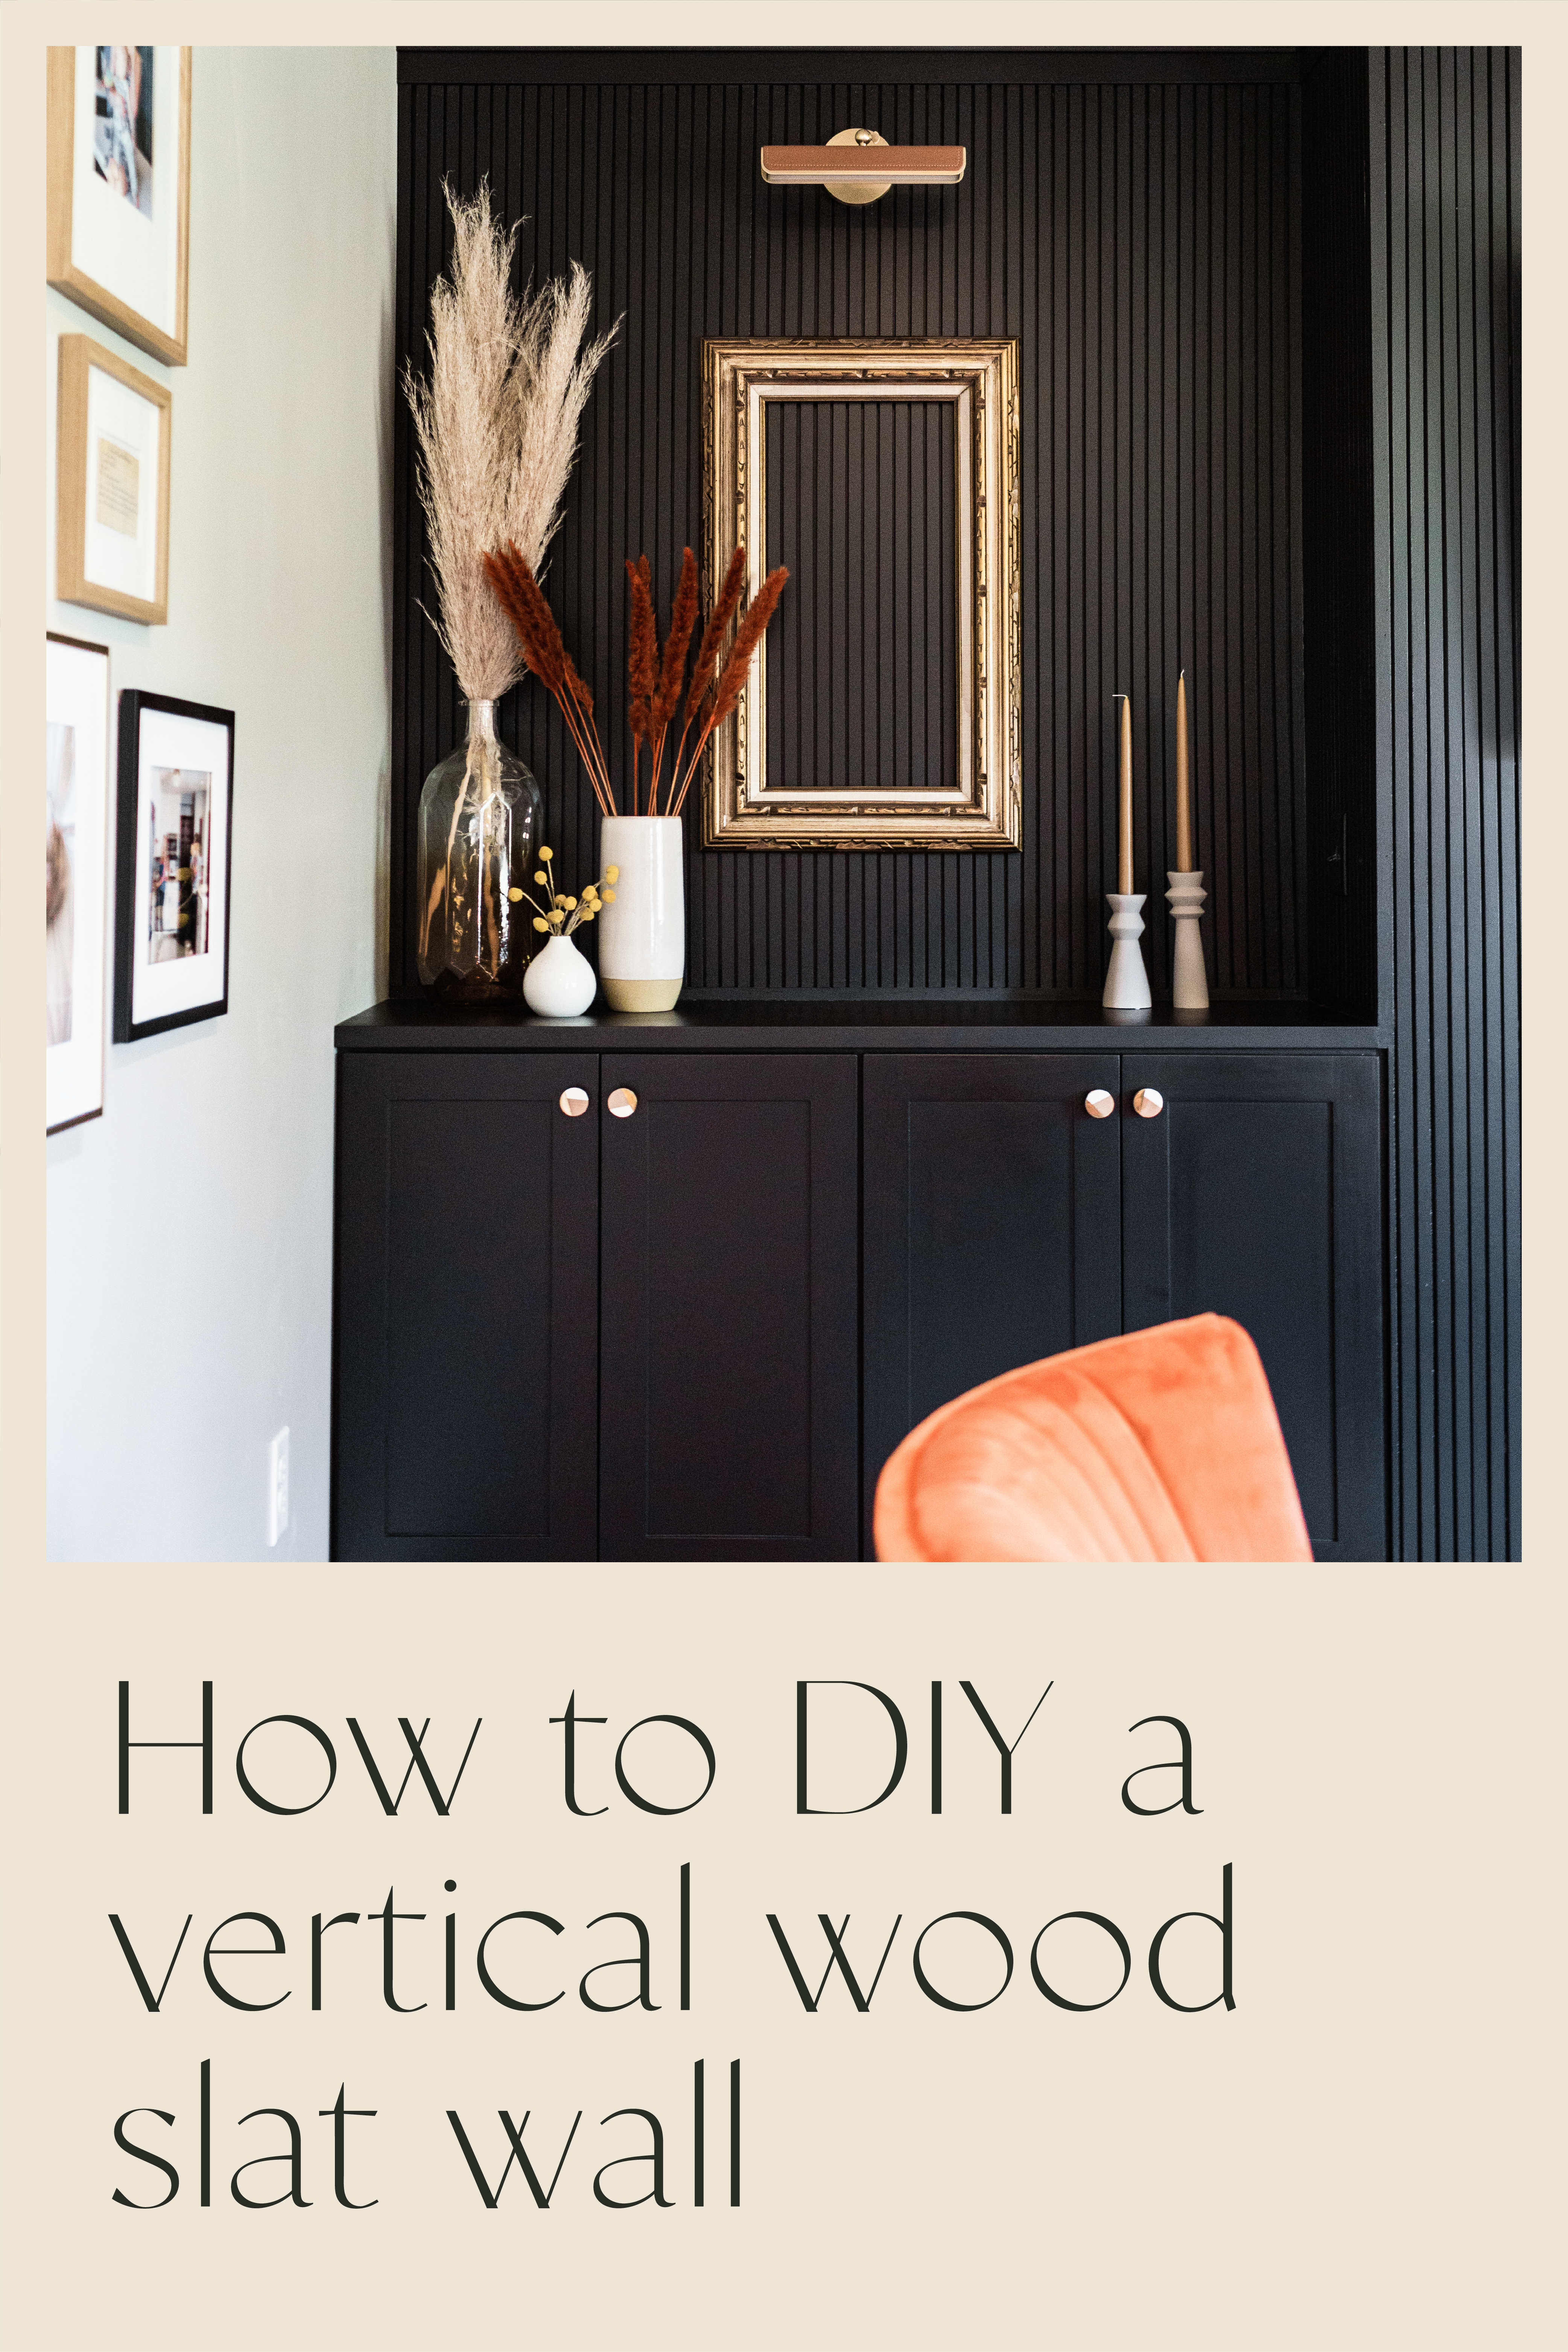 Vertical Wood Slat Wall | How to DIY 25